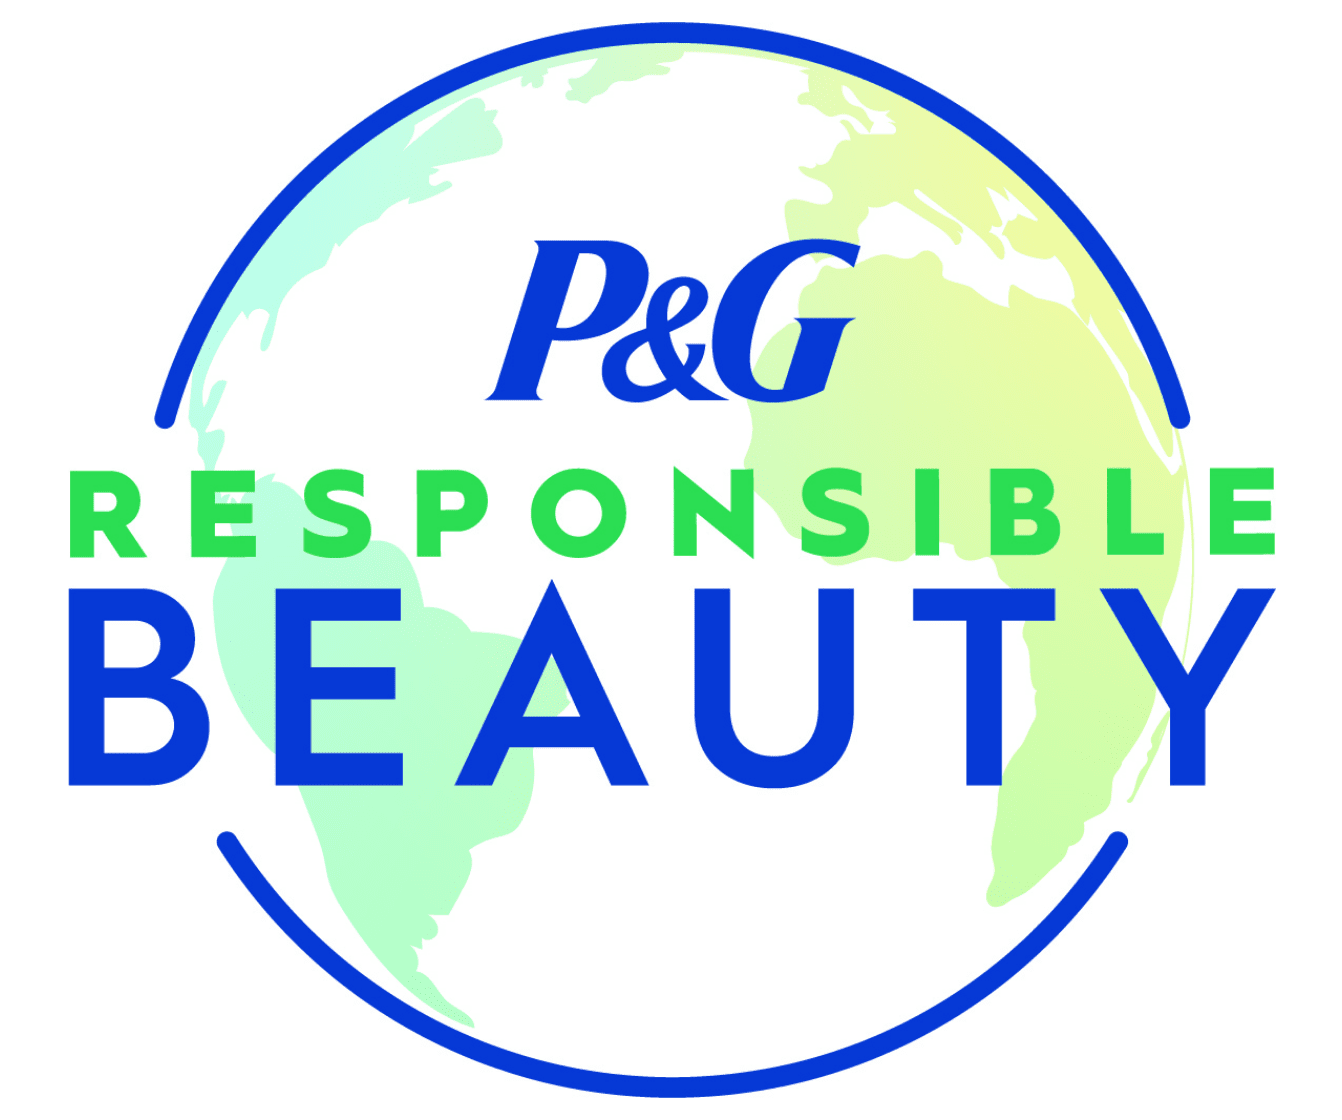 P&G Responsible Beauty